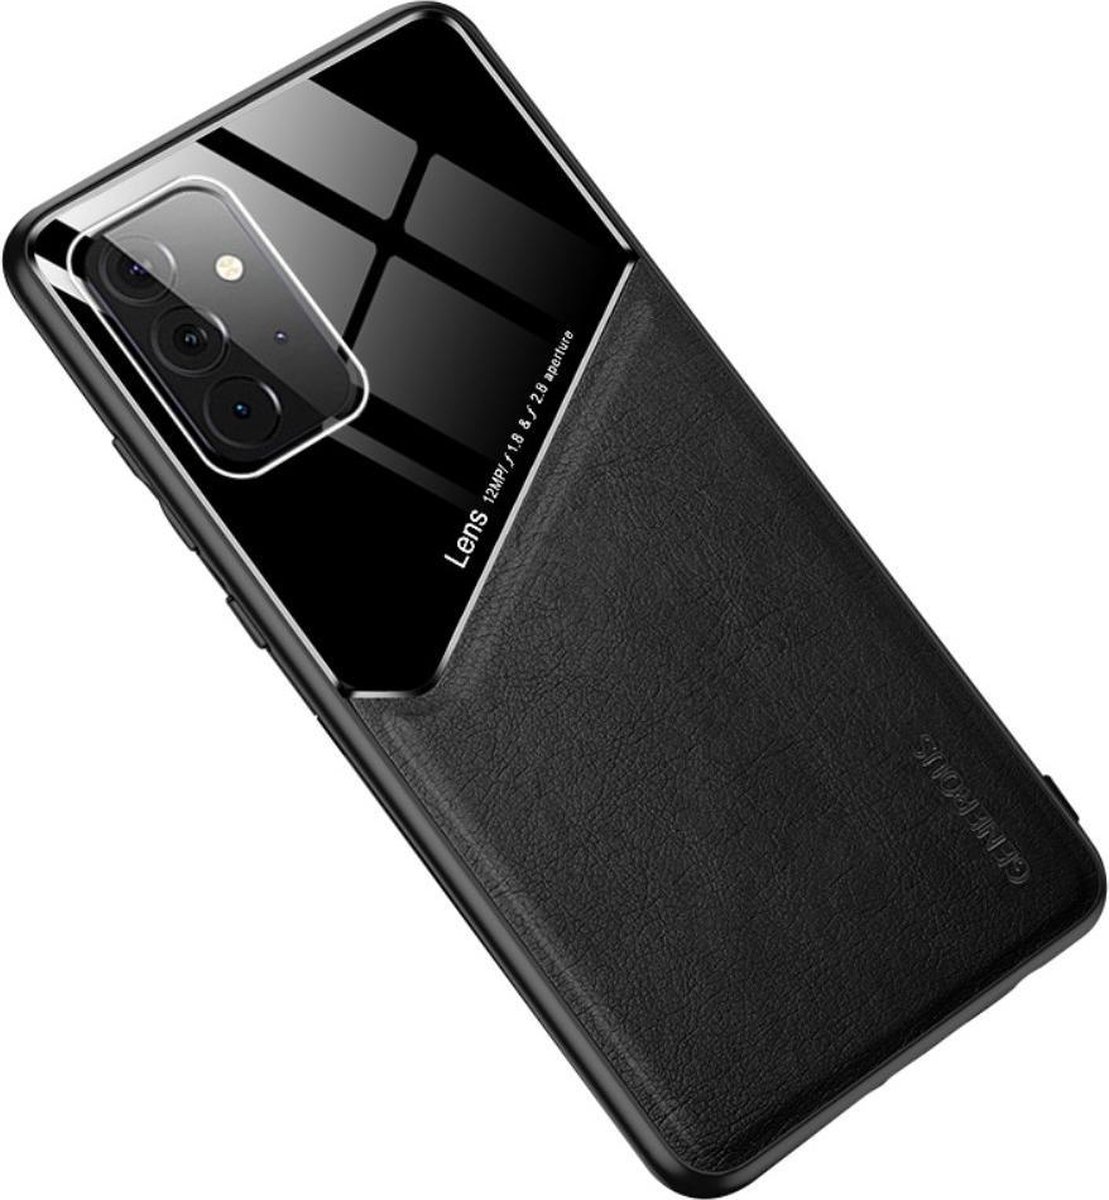 Zwarte hard cover Samsung Galaxy A72 geschikt voor magnetische autohouder